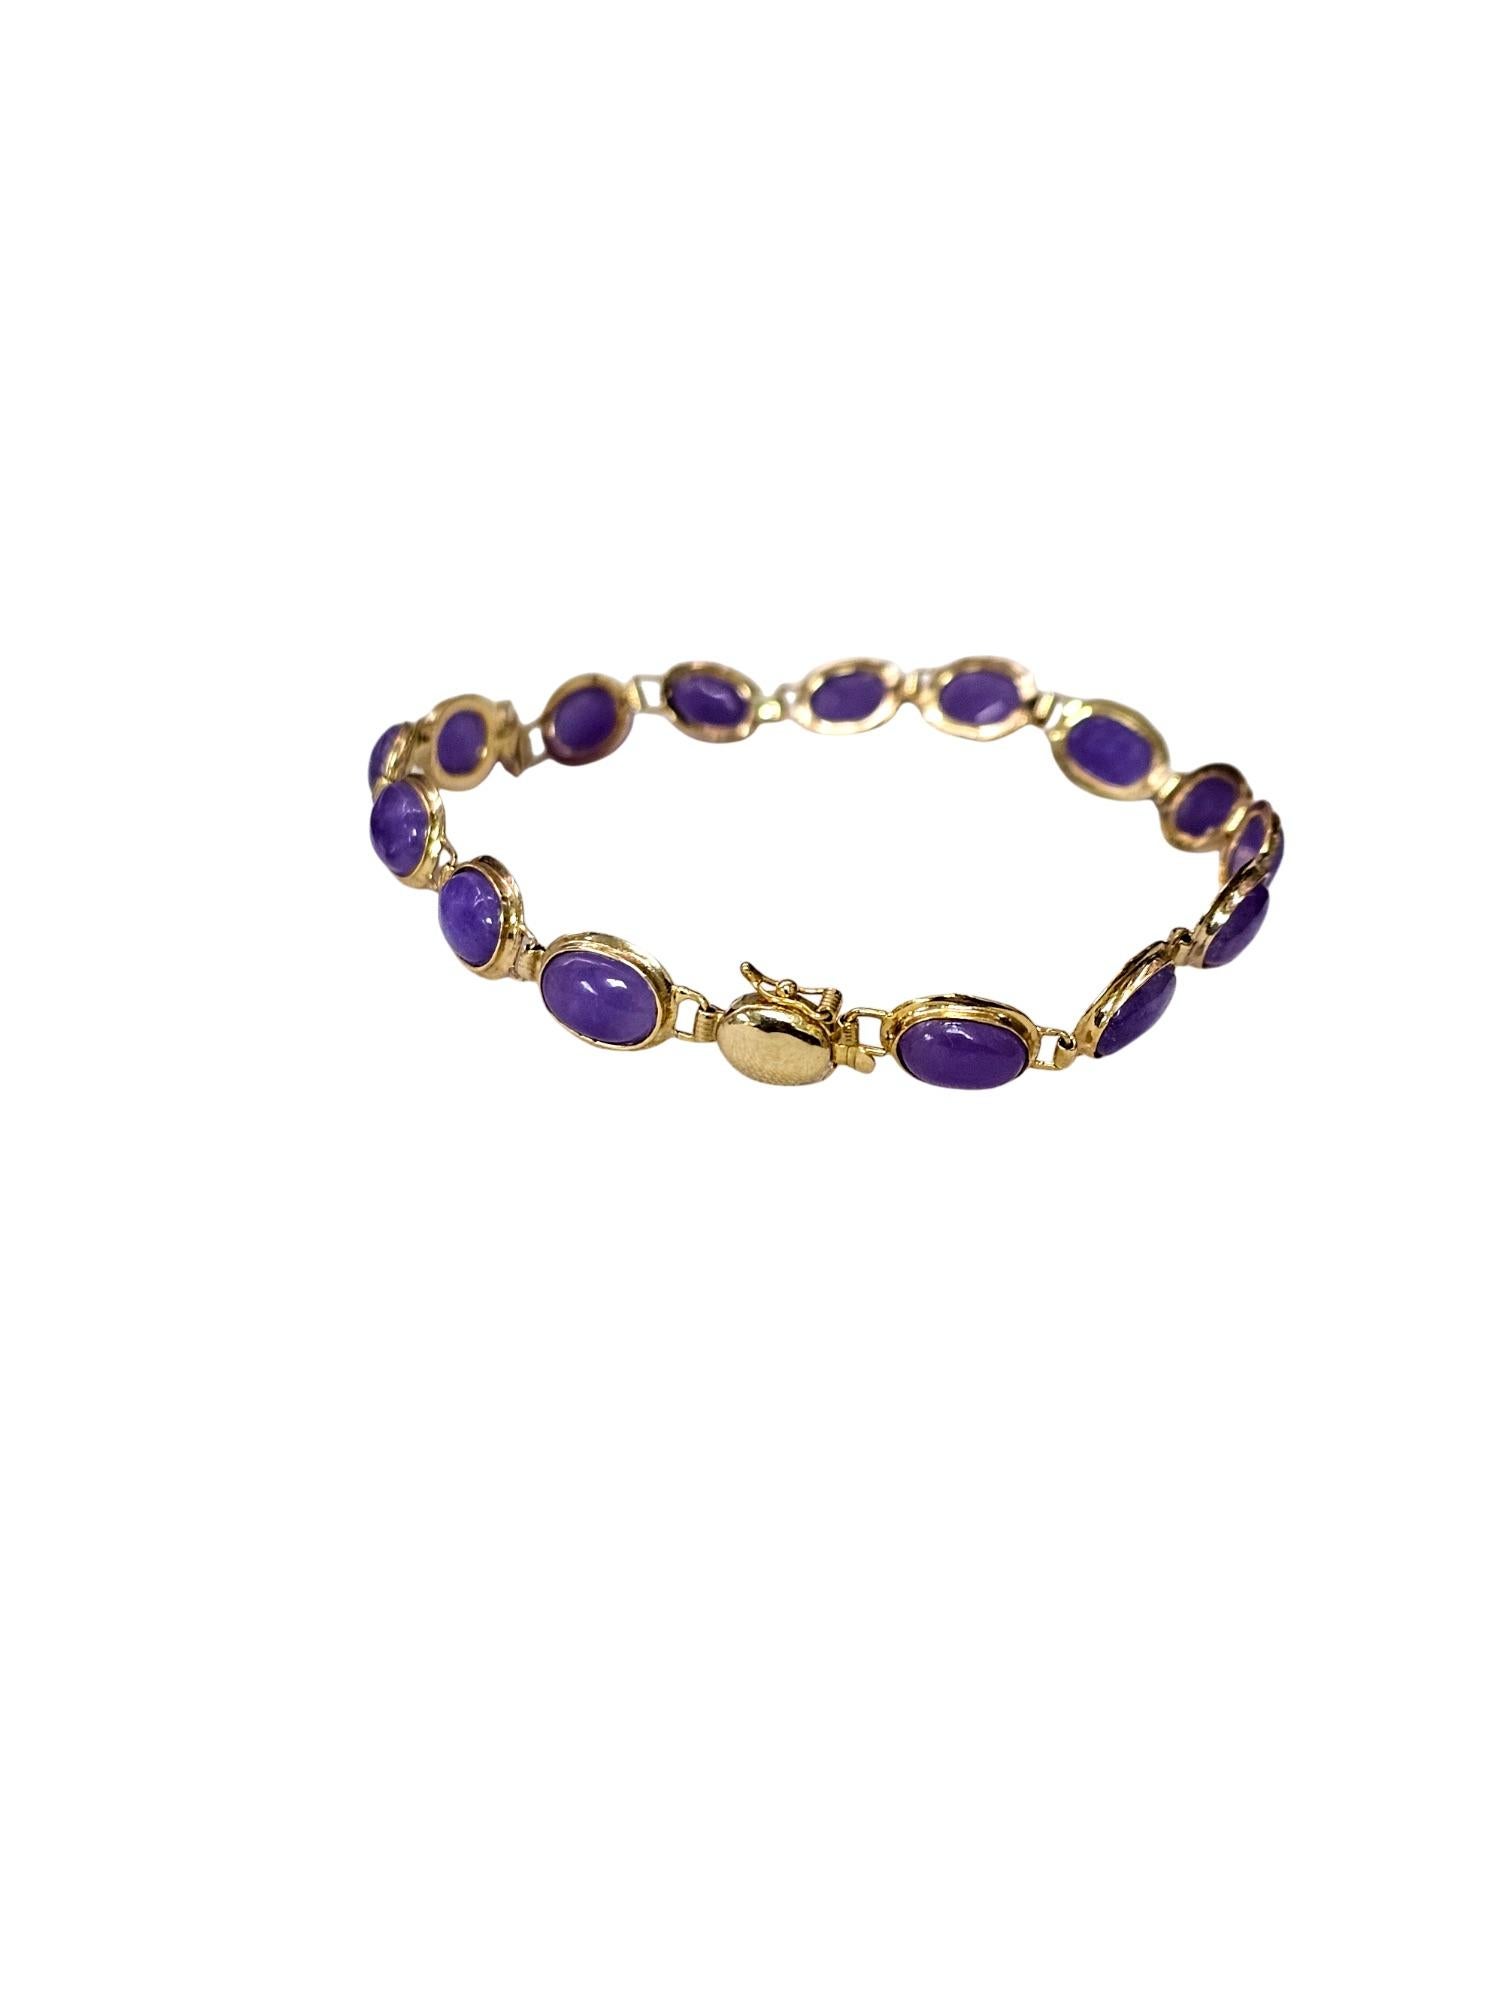 Tibetan Purple Lavender Jadeite Beaded Bracelet (with 14K Solid Yellow Gold) For Sale 2